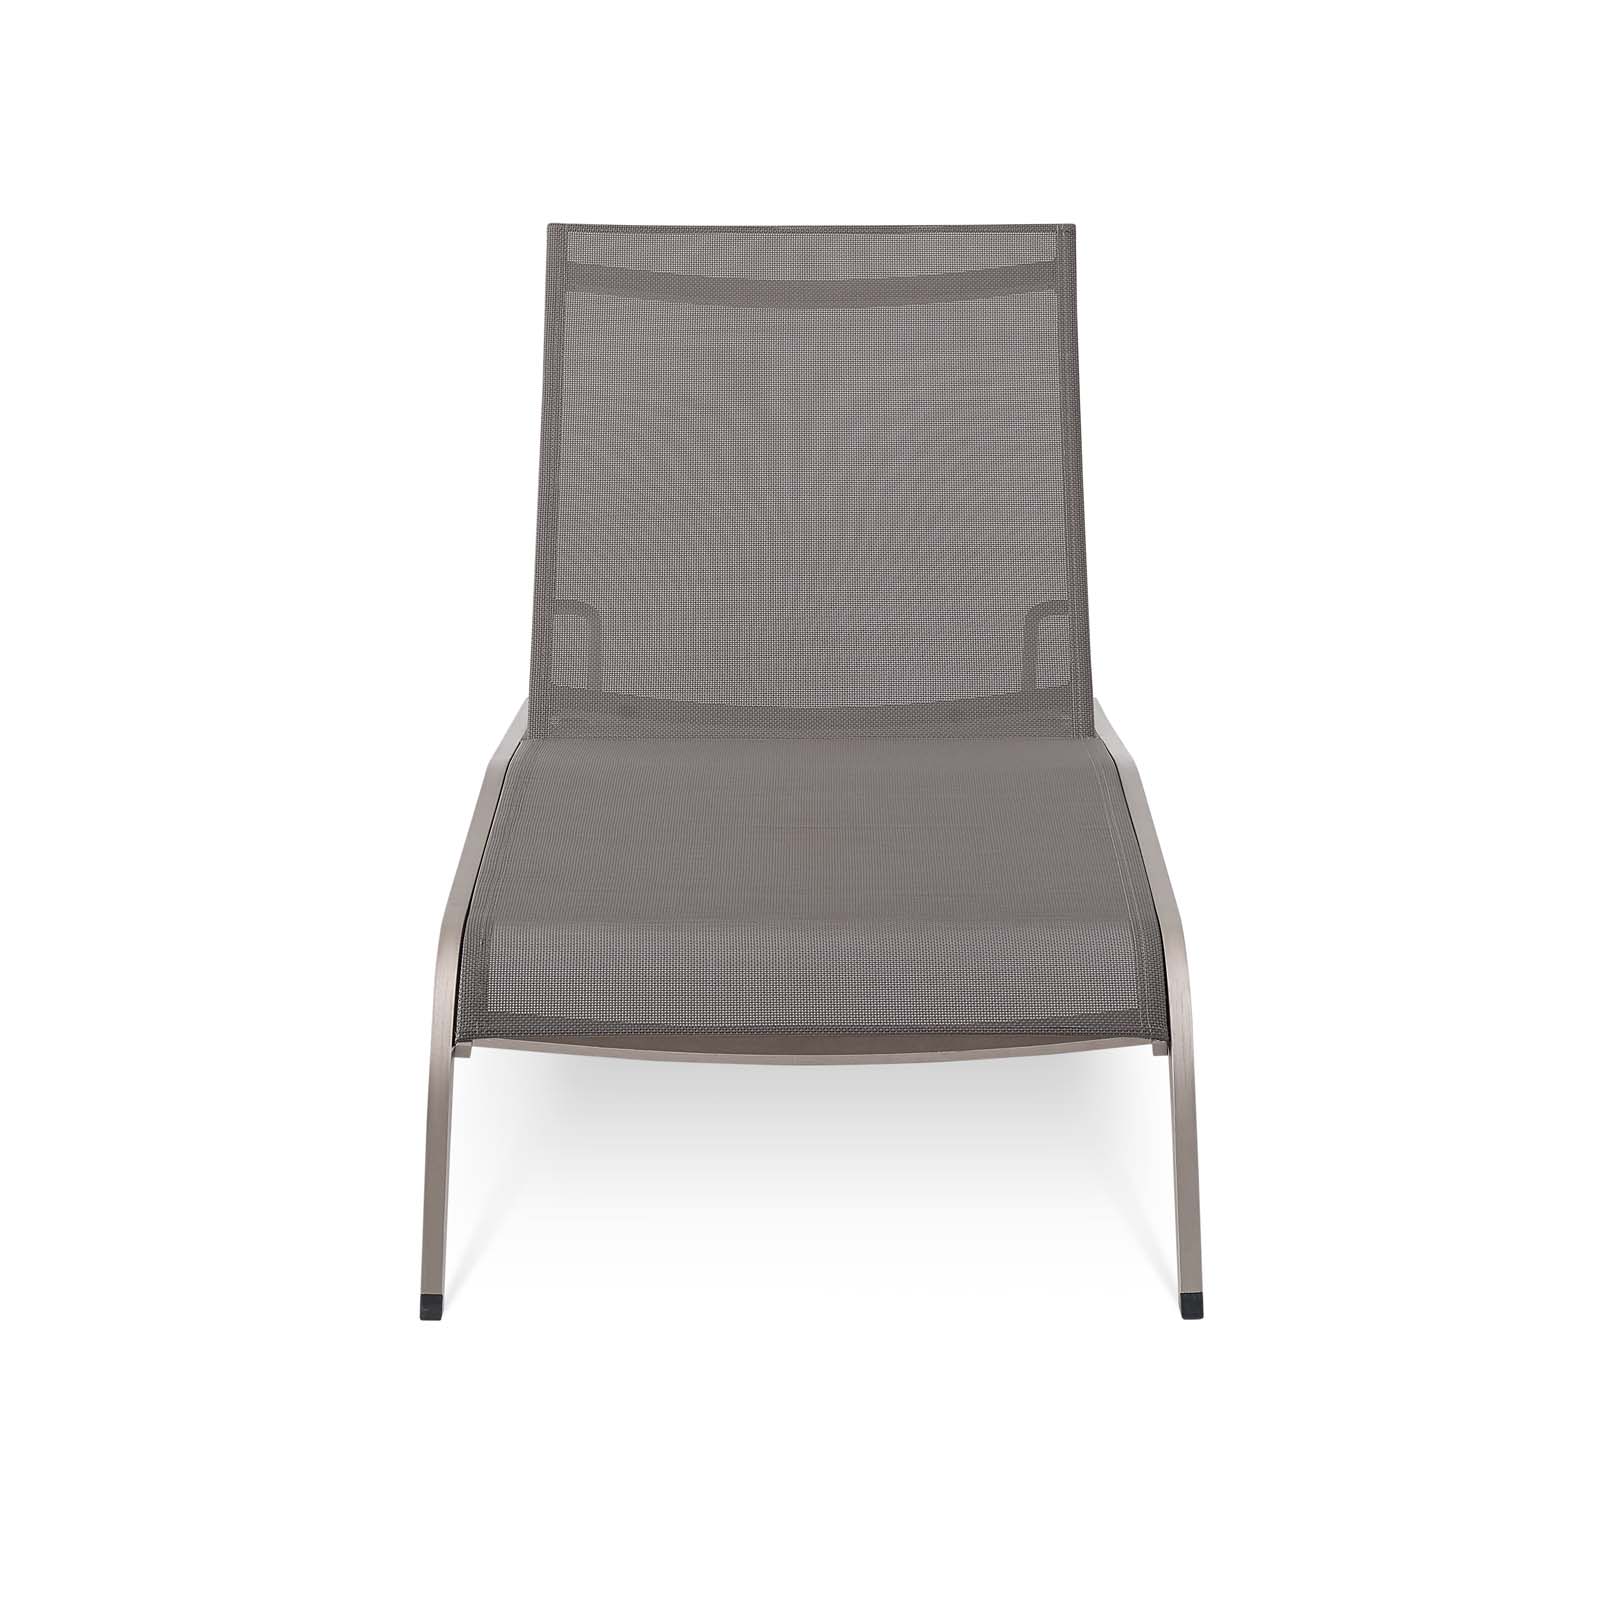 Contemporary Modern Urban Designer Outdoor Patio Balcony Garden Furniture Lounge Lounge Chair, Aluminum, Grey Gray - image 2 of 7